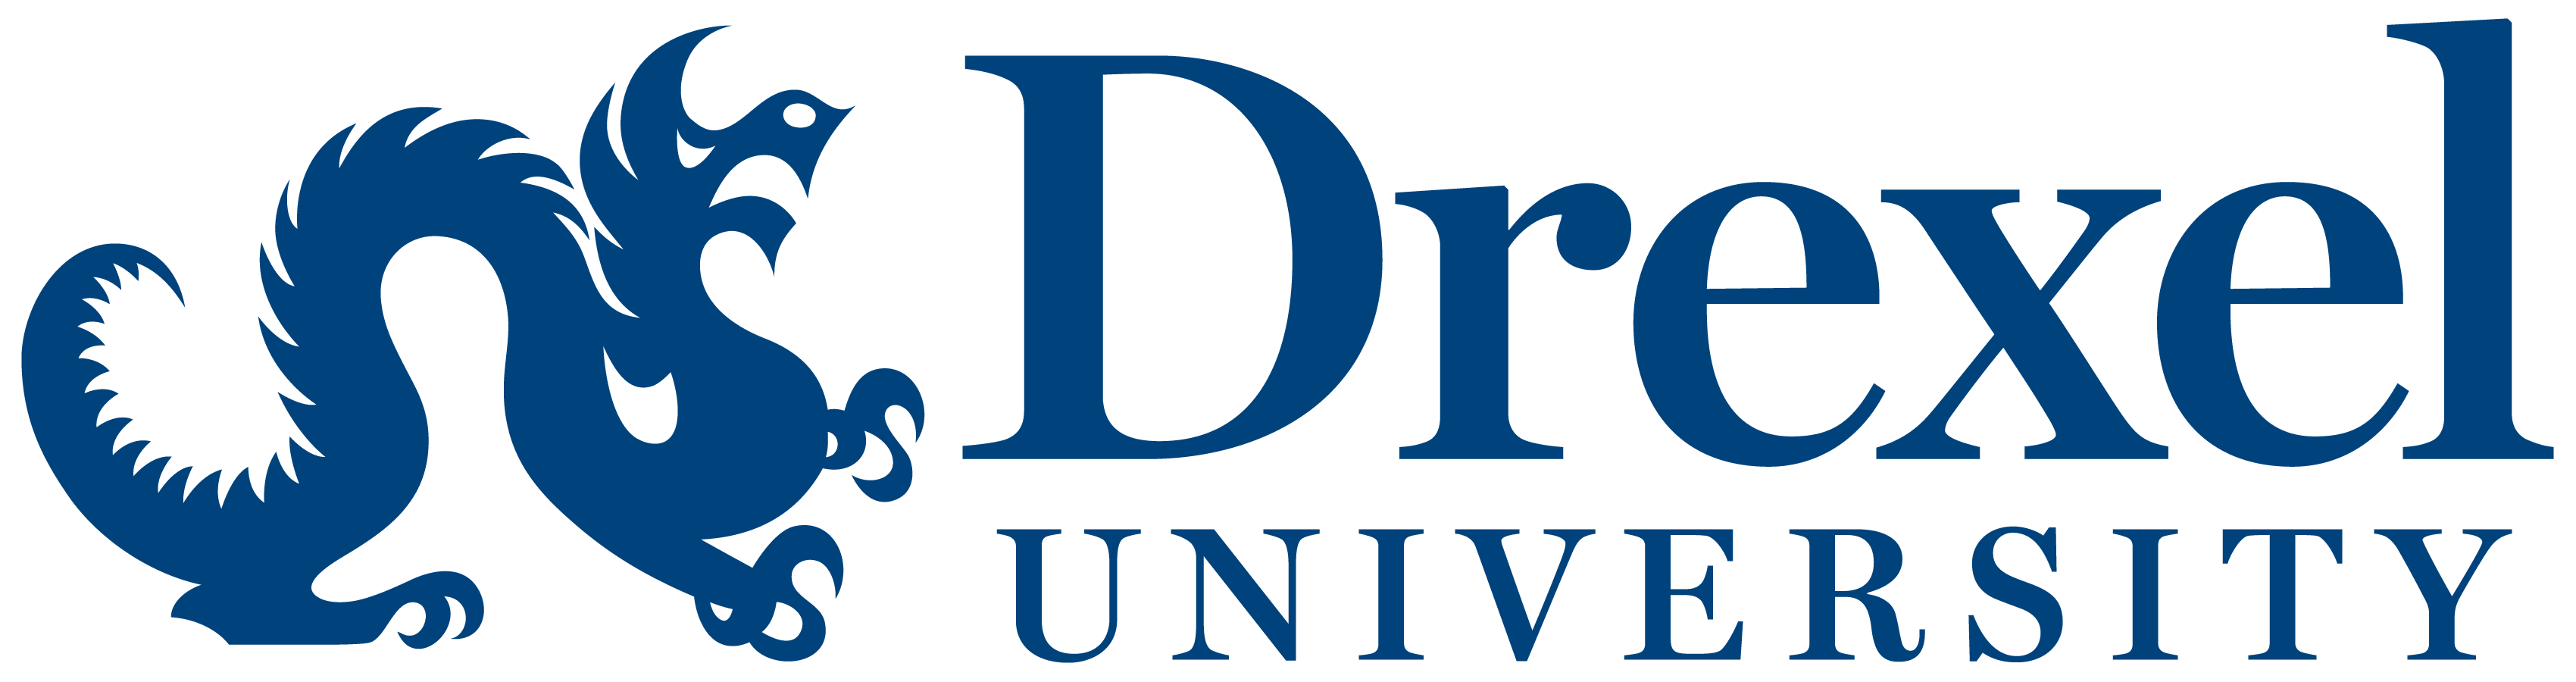 Drexel-logo